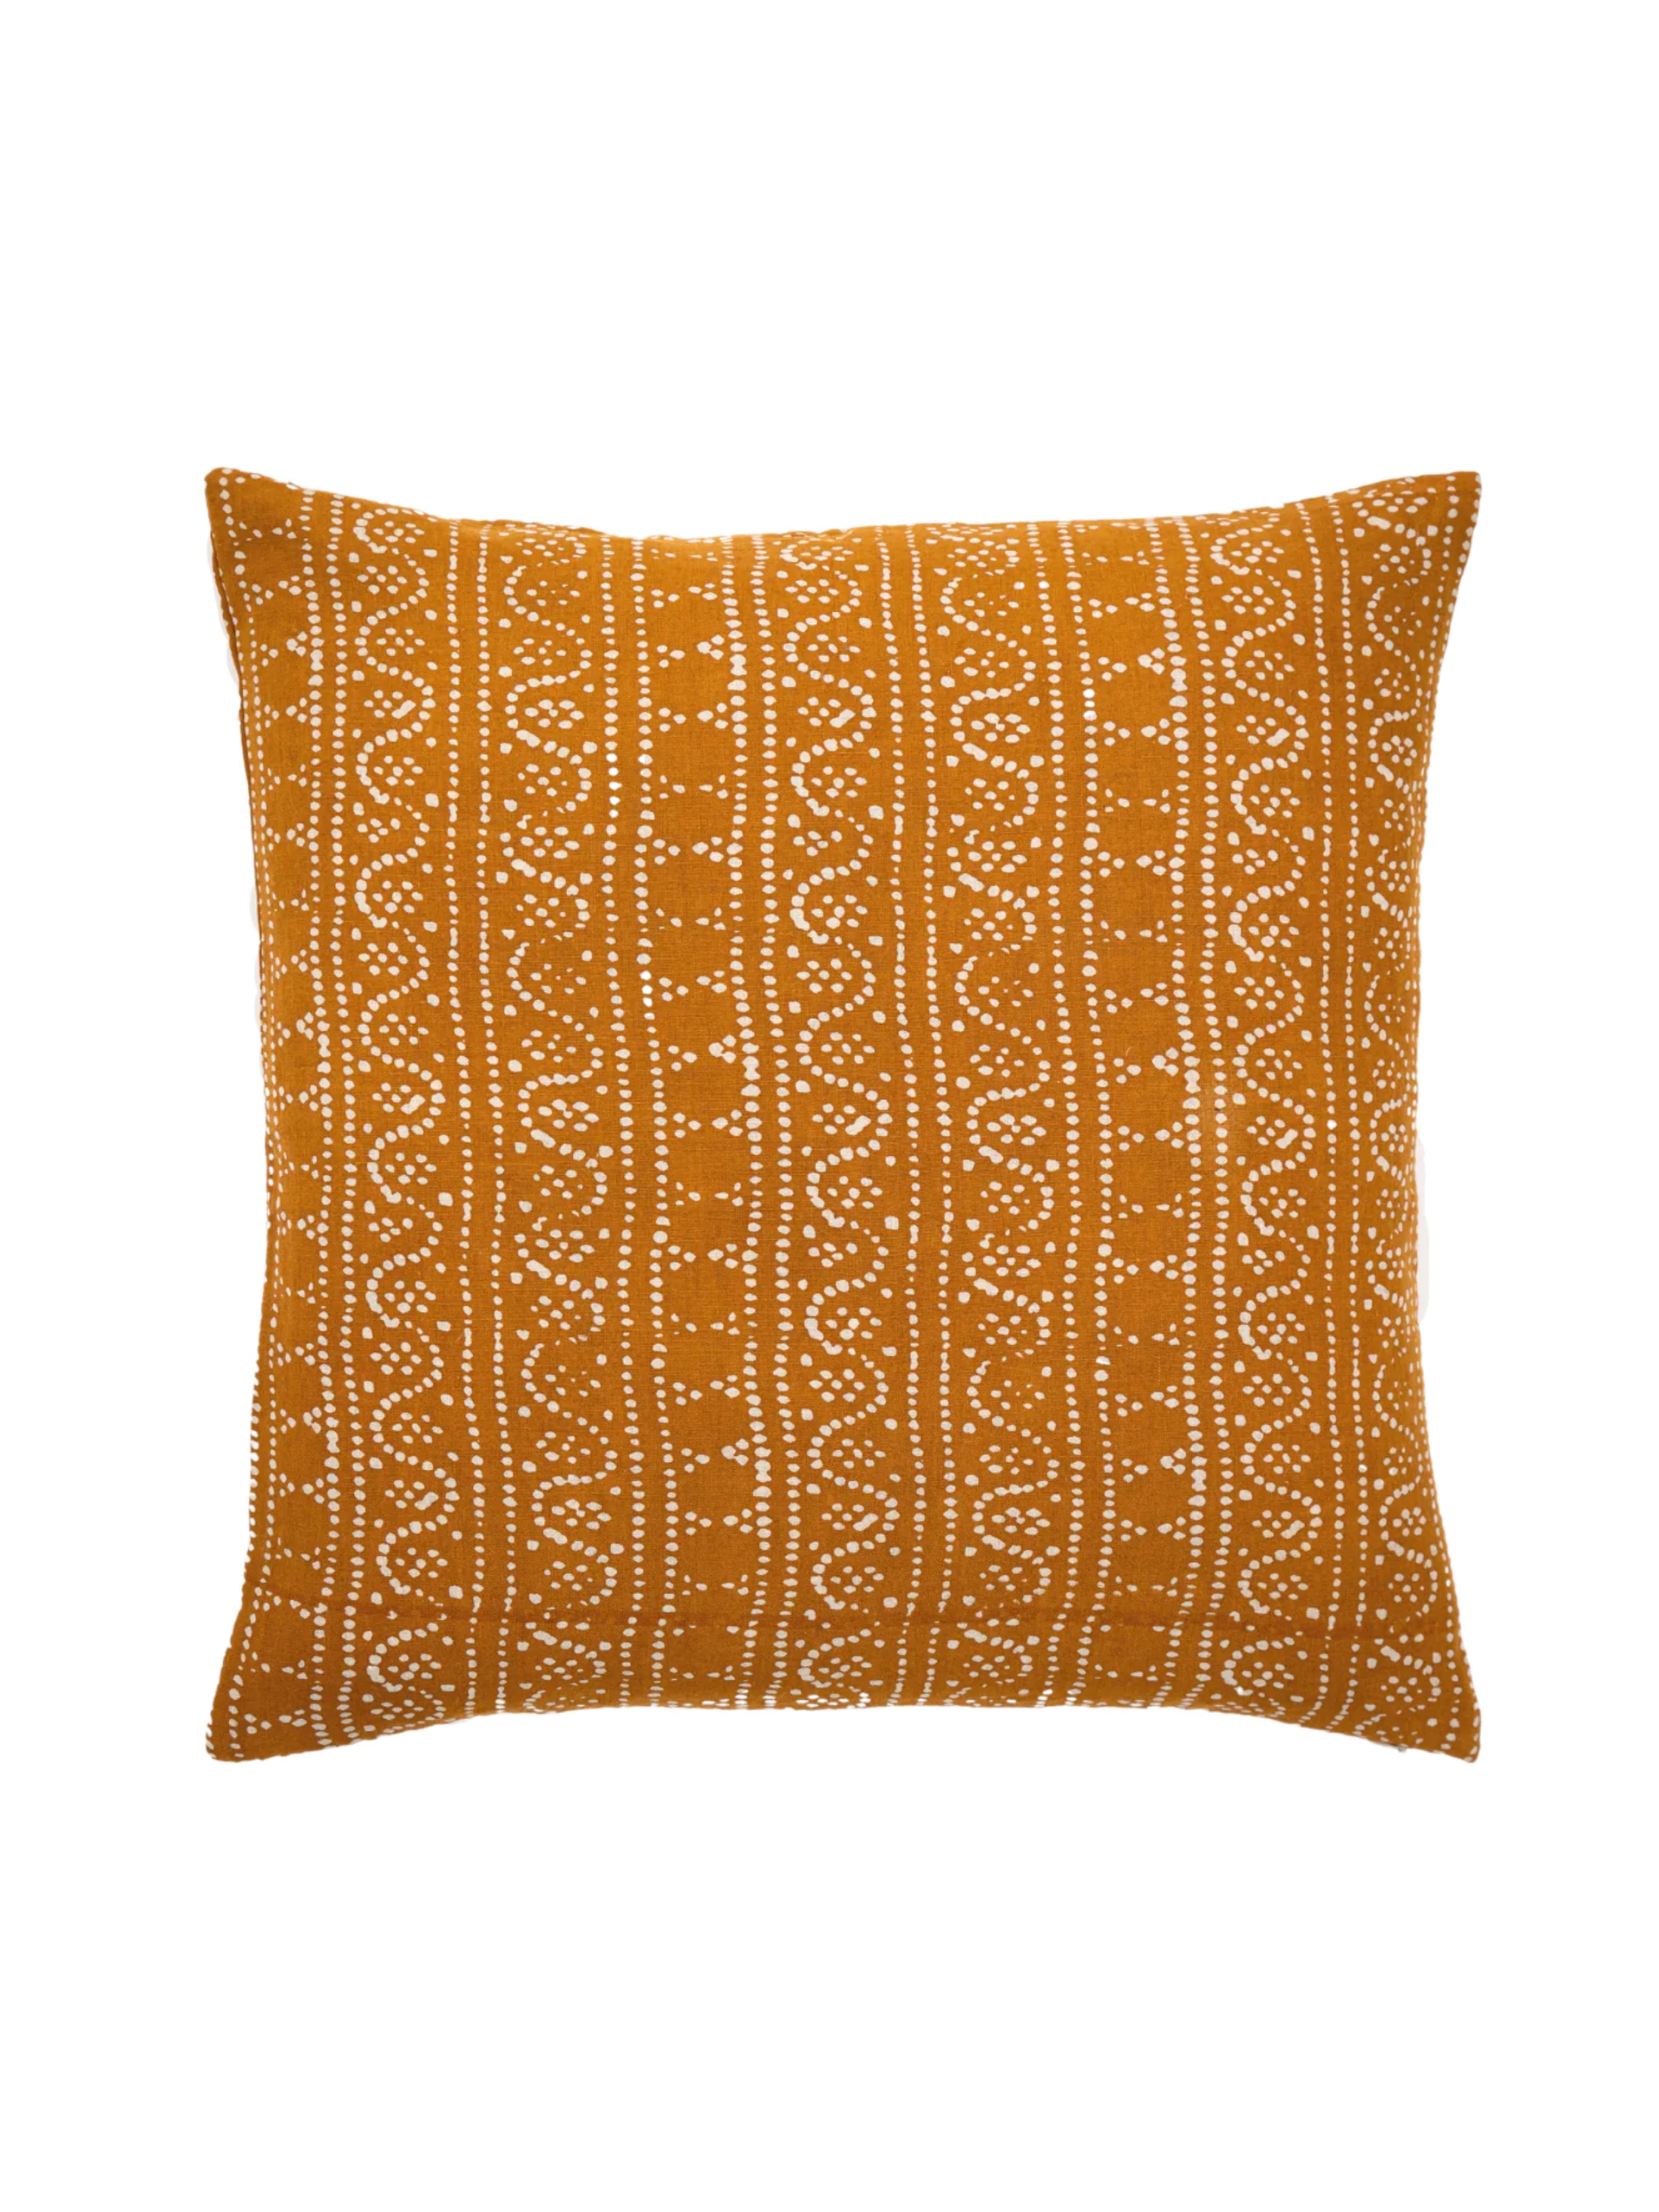 Sumatra Ochre Decorative Pillow Cover